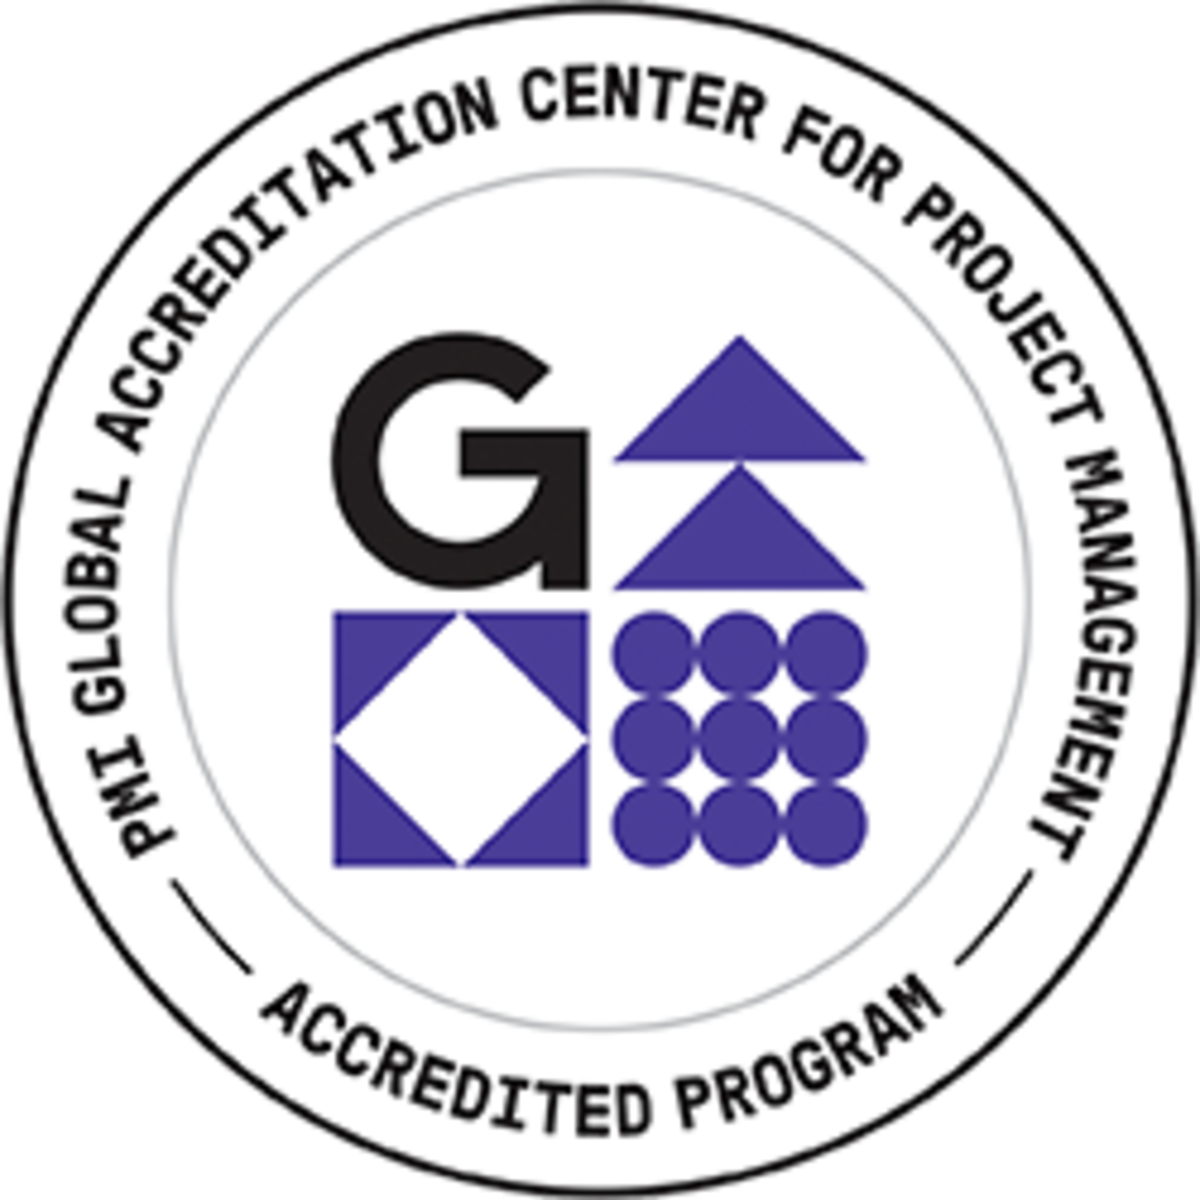 Project Management Institute Logo